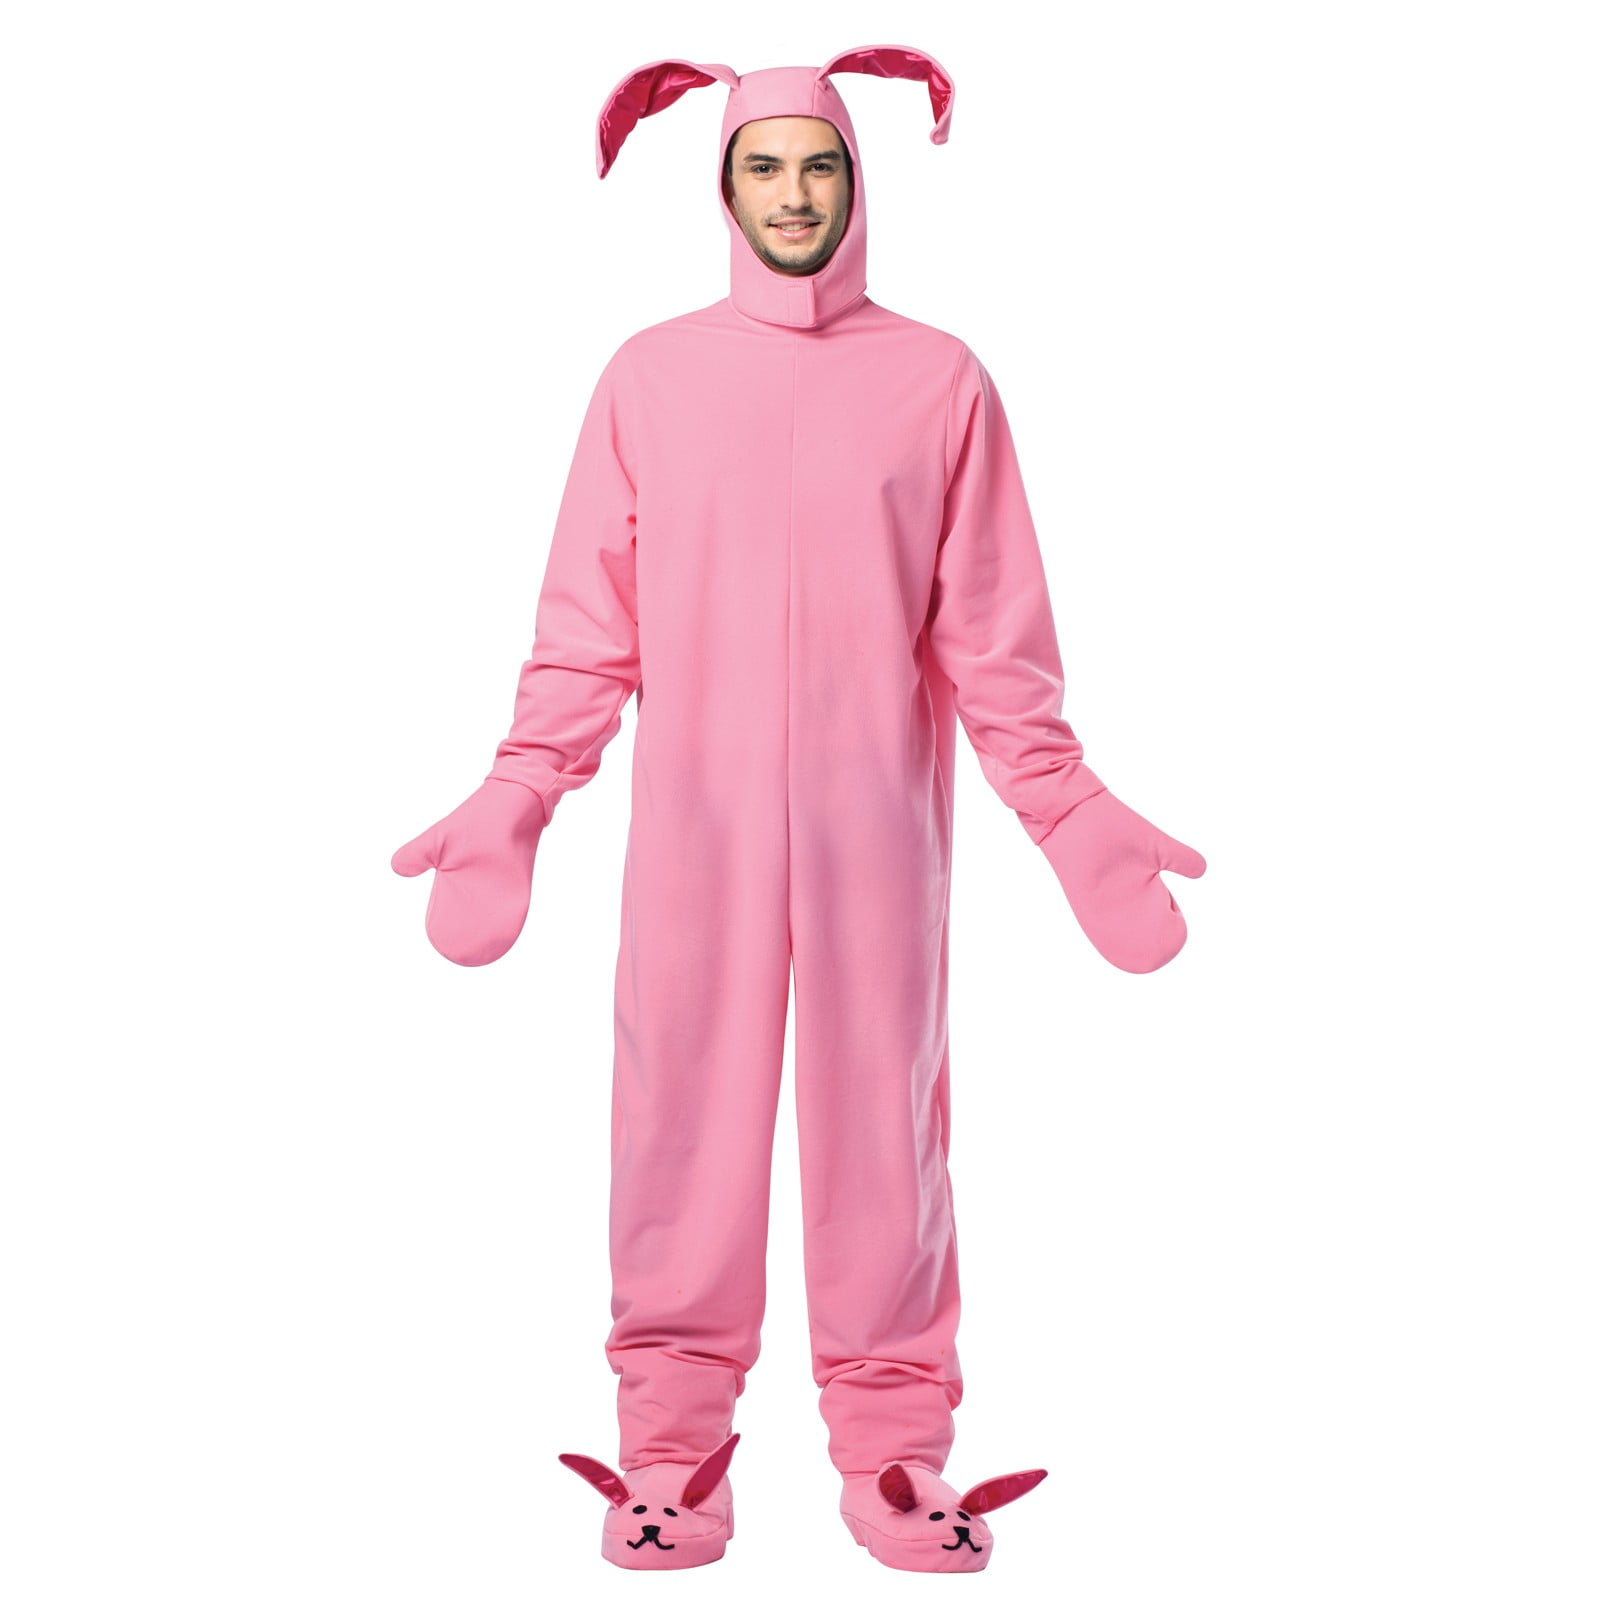 Big Pink Baby Adult Romper Sleep Suit Costume Unisex Jumpsuit Fancy Dress Outfit 